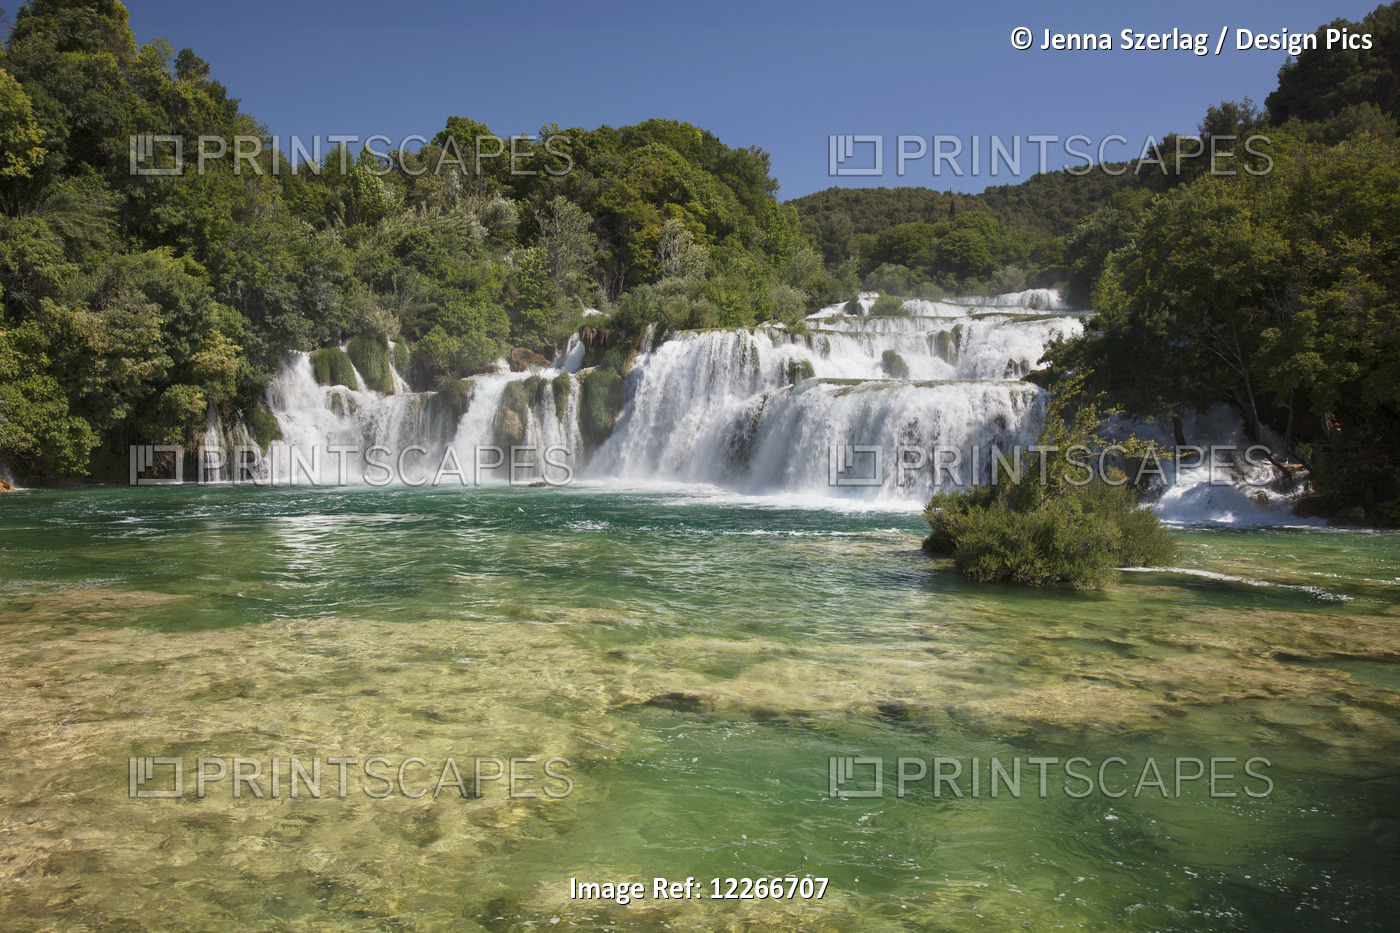 Waterfalls In Krka National Park; Sibenik, Dalmatia, Croatia